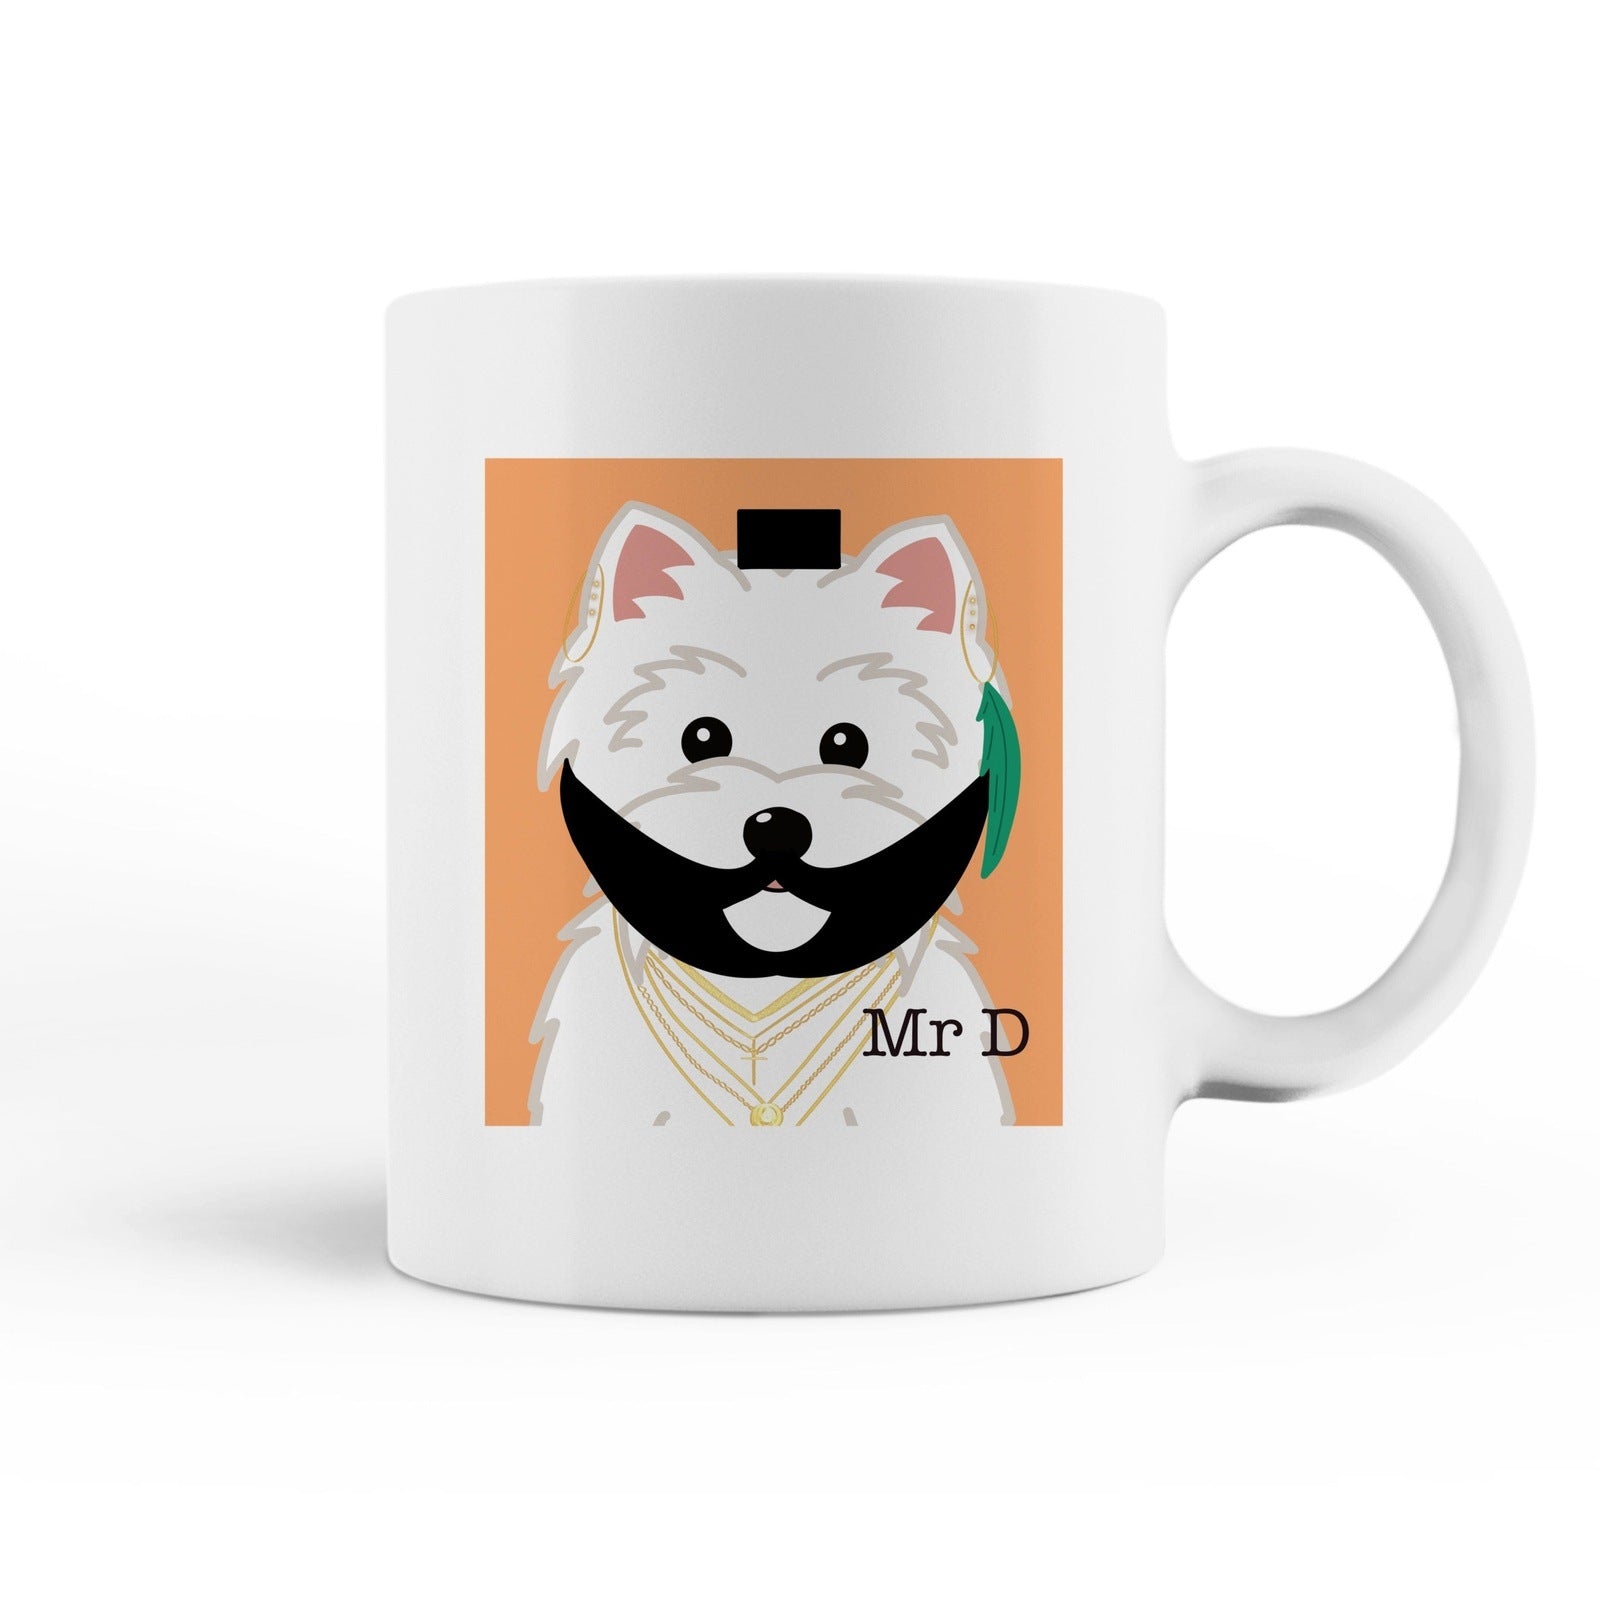 Mr D Mug